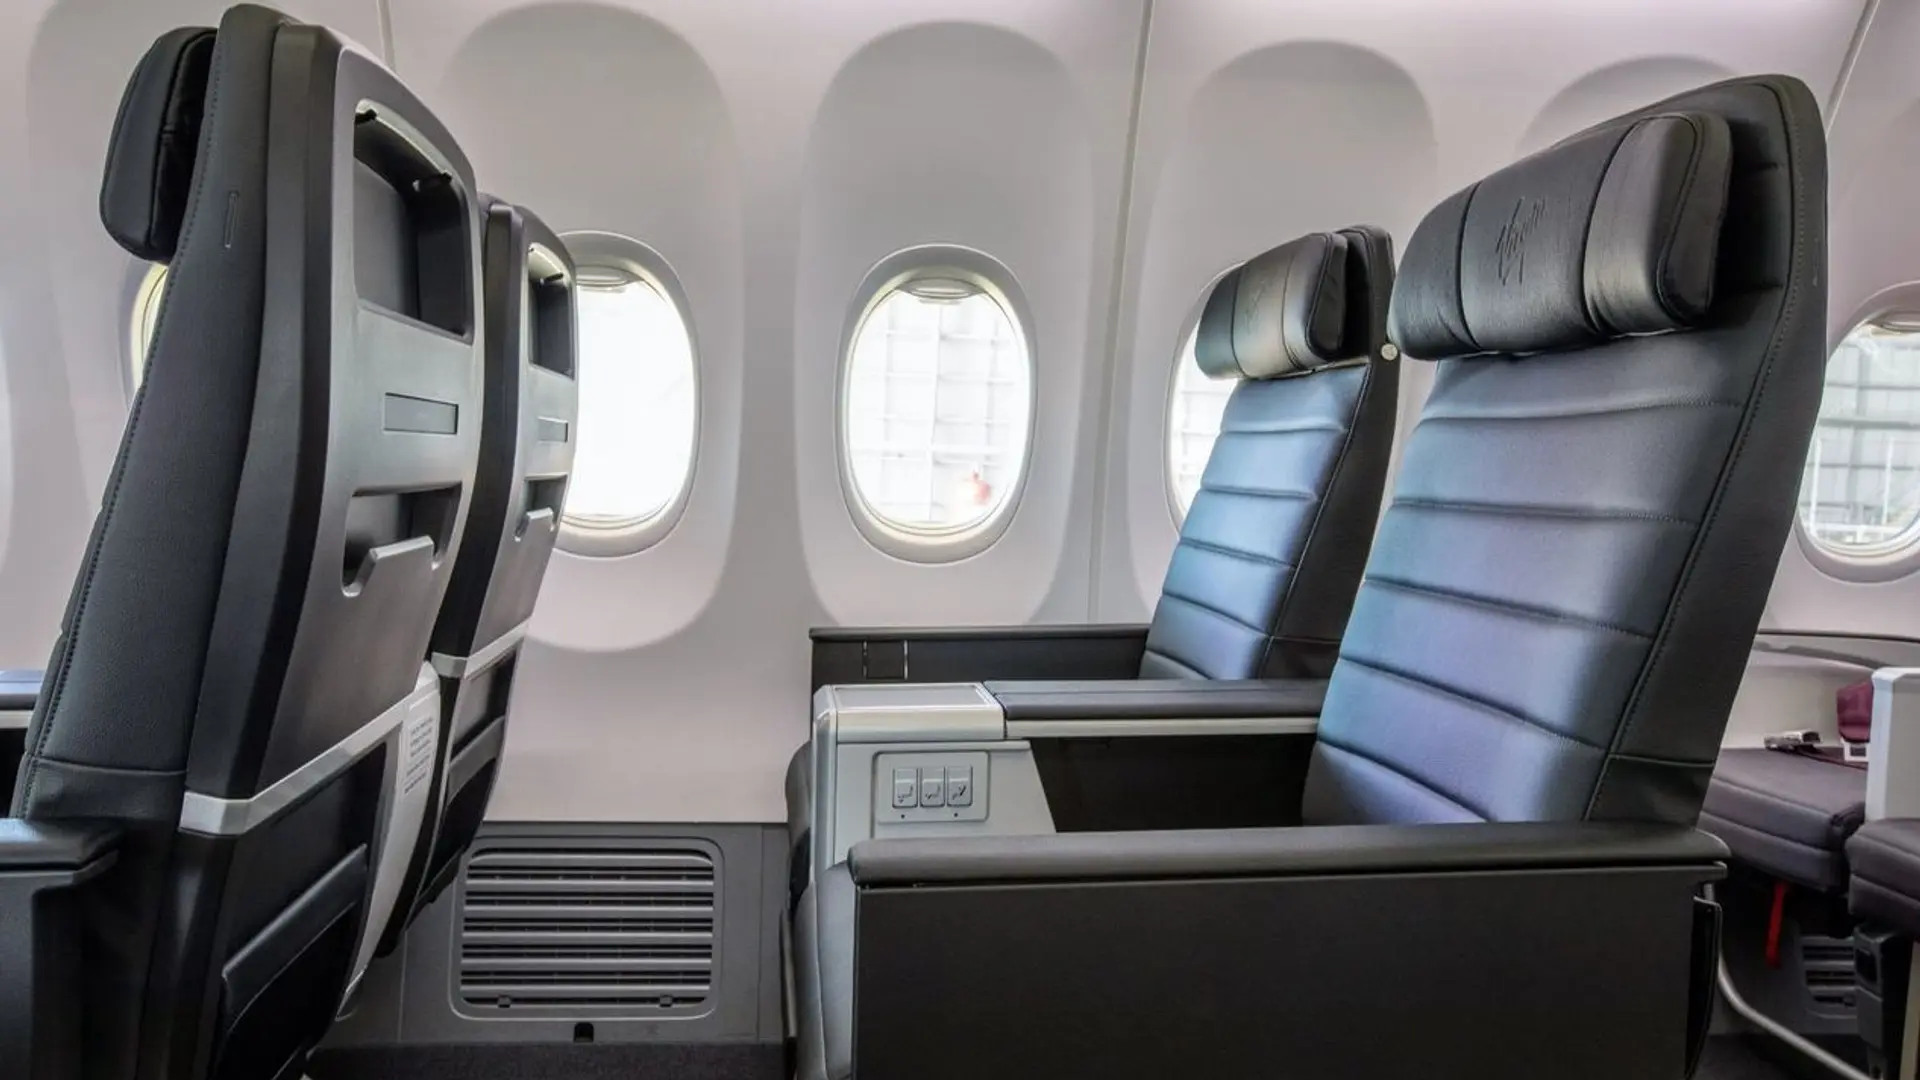 Airline review Cabin & Seat - Virgin Australia - 6